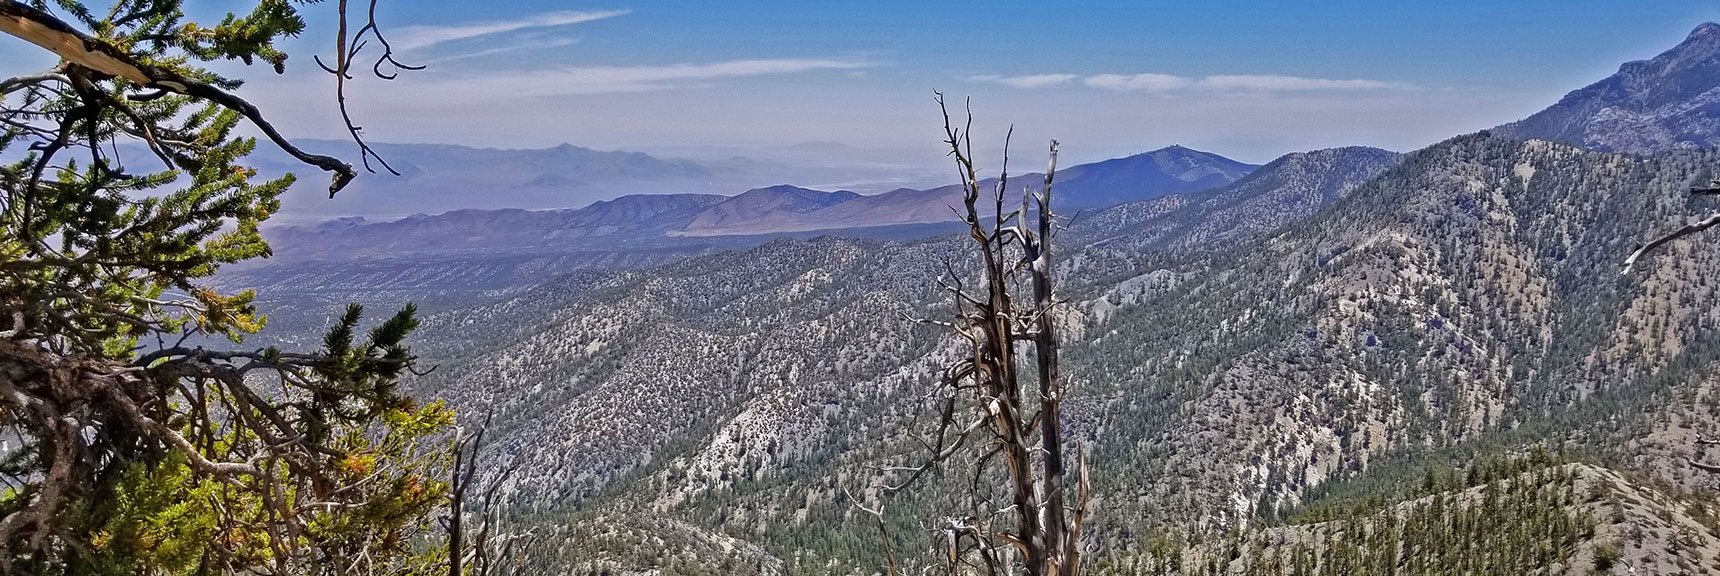 Angel Peak, Gass Peak and Northern Las Vegas Valley from Near Summit Final Approach | Macks Peak | Mt Charleston Wilderness | Spring Mountains, Nevada